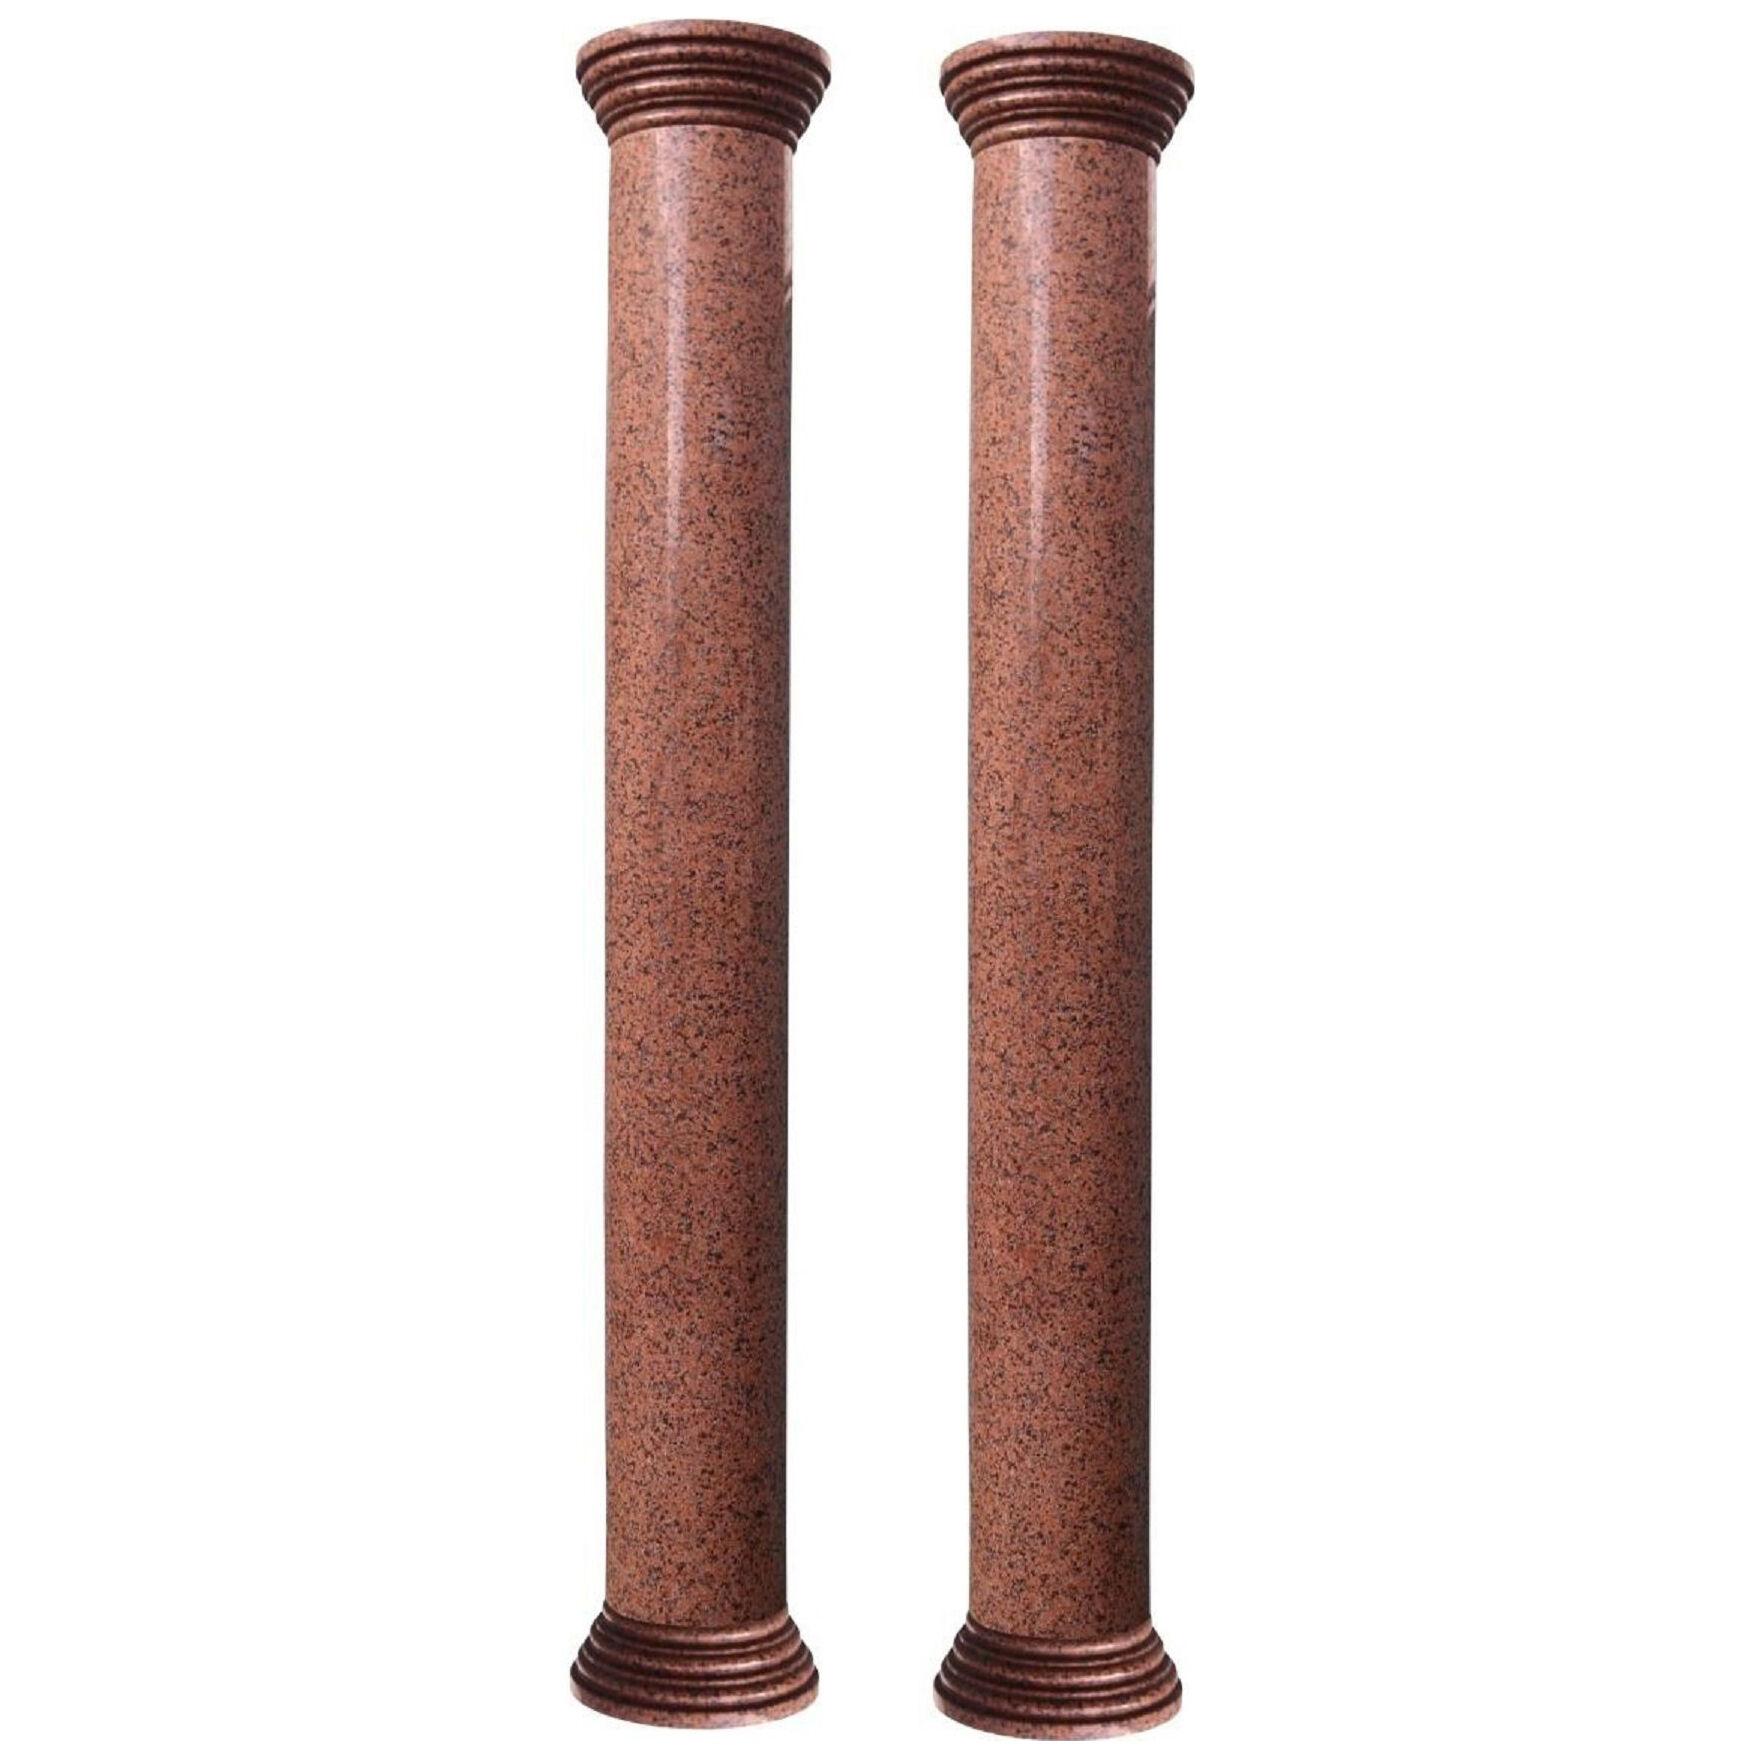 Two Reclaimed Granite Columns 269 cm (8'8")